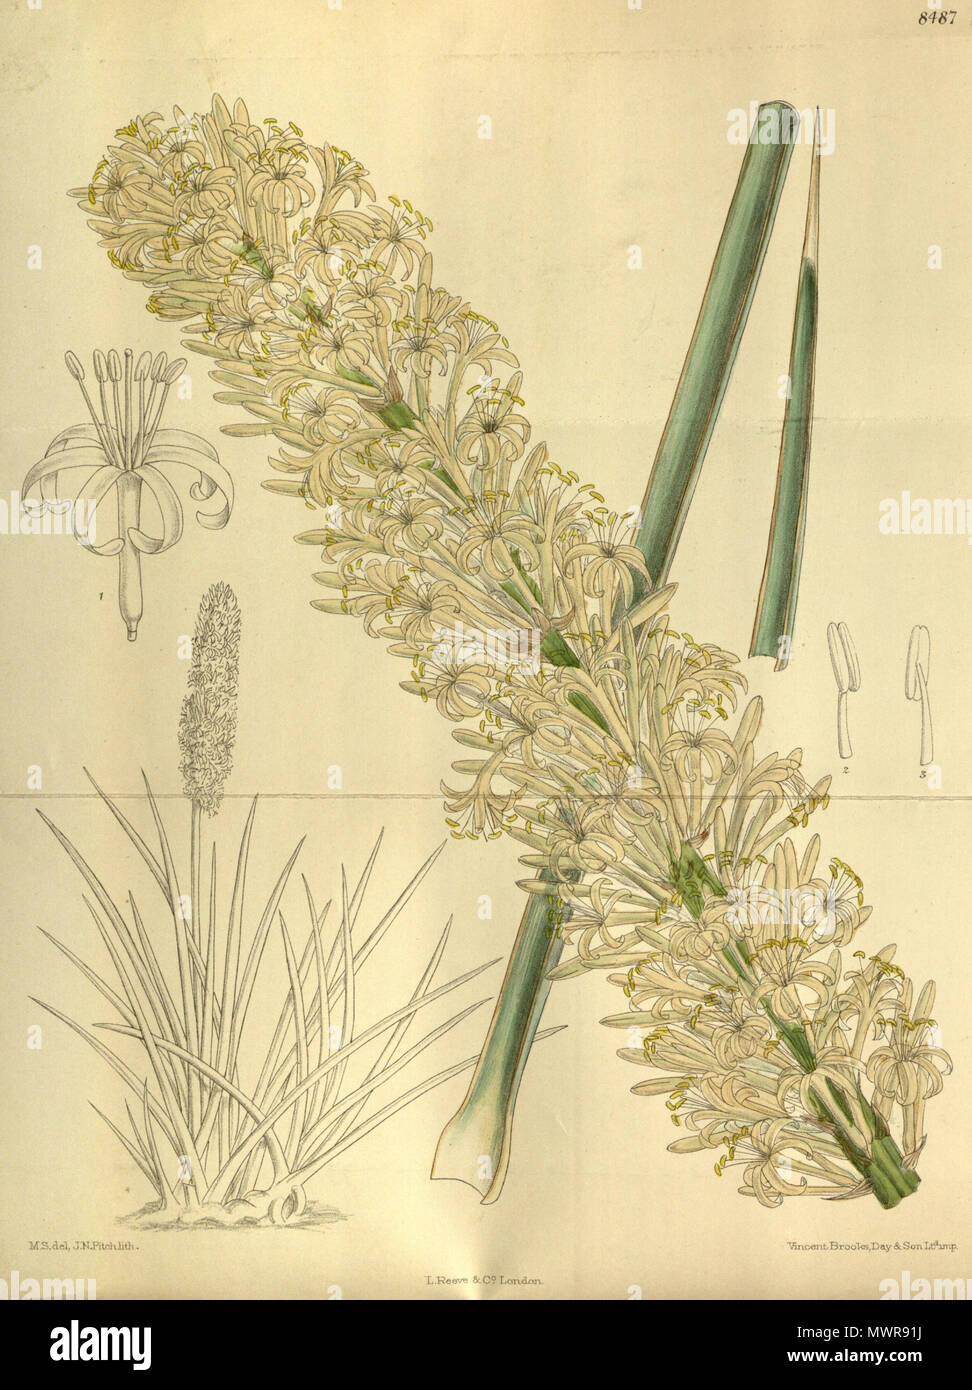 . Sansevieria aethiopica, Asparagaceae, Nolinoideae . 1913. M.S. del, J.N.Fitch, lith. 543 Sansevieria aethiopica 139-8487 Stock Photo